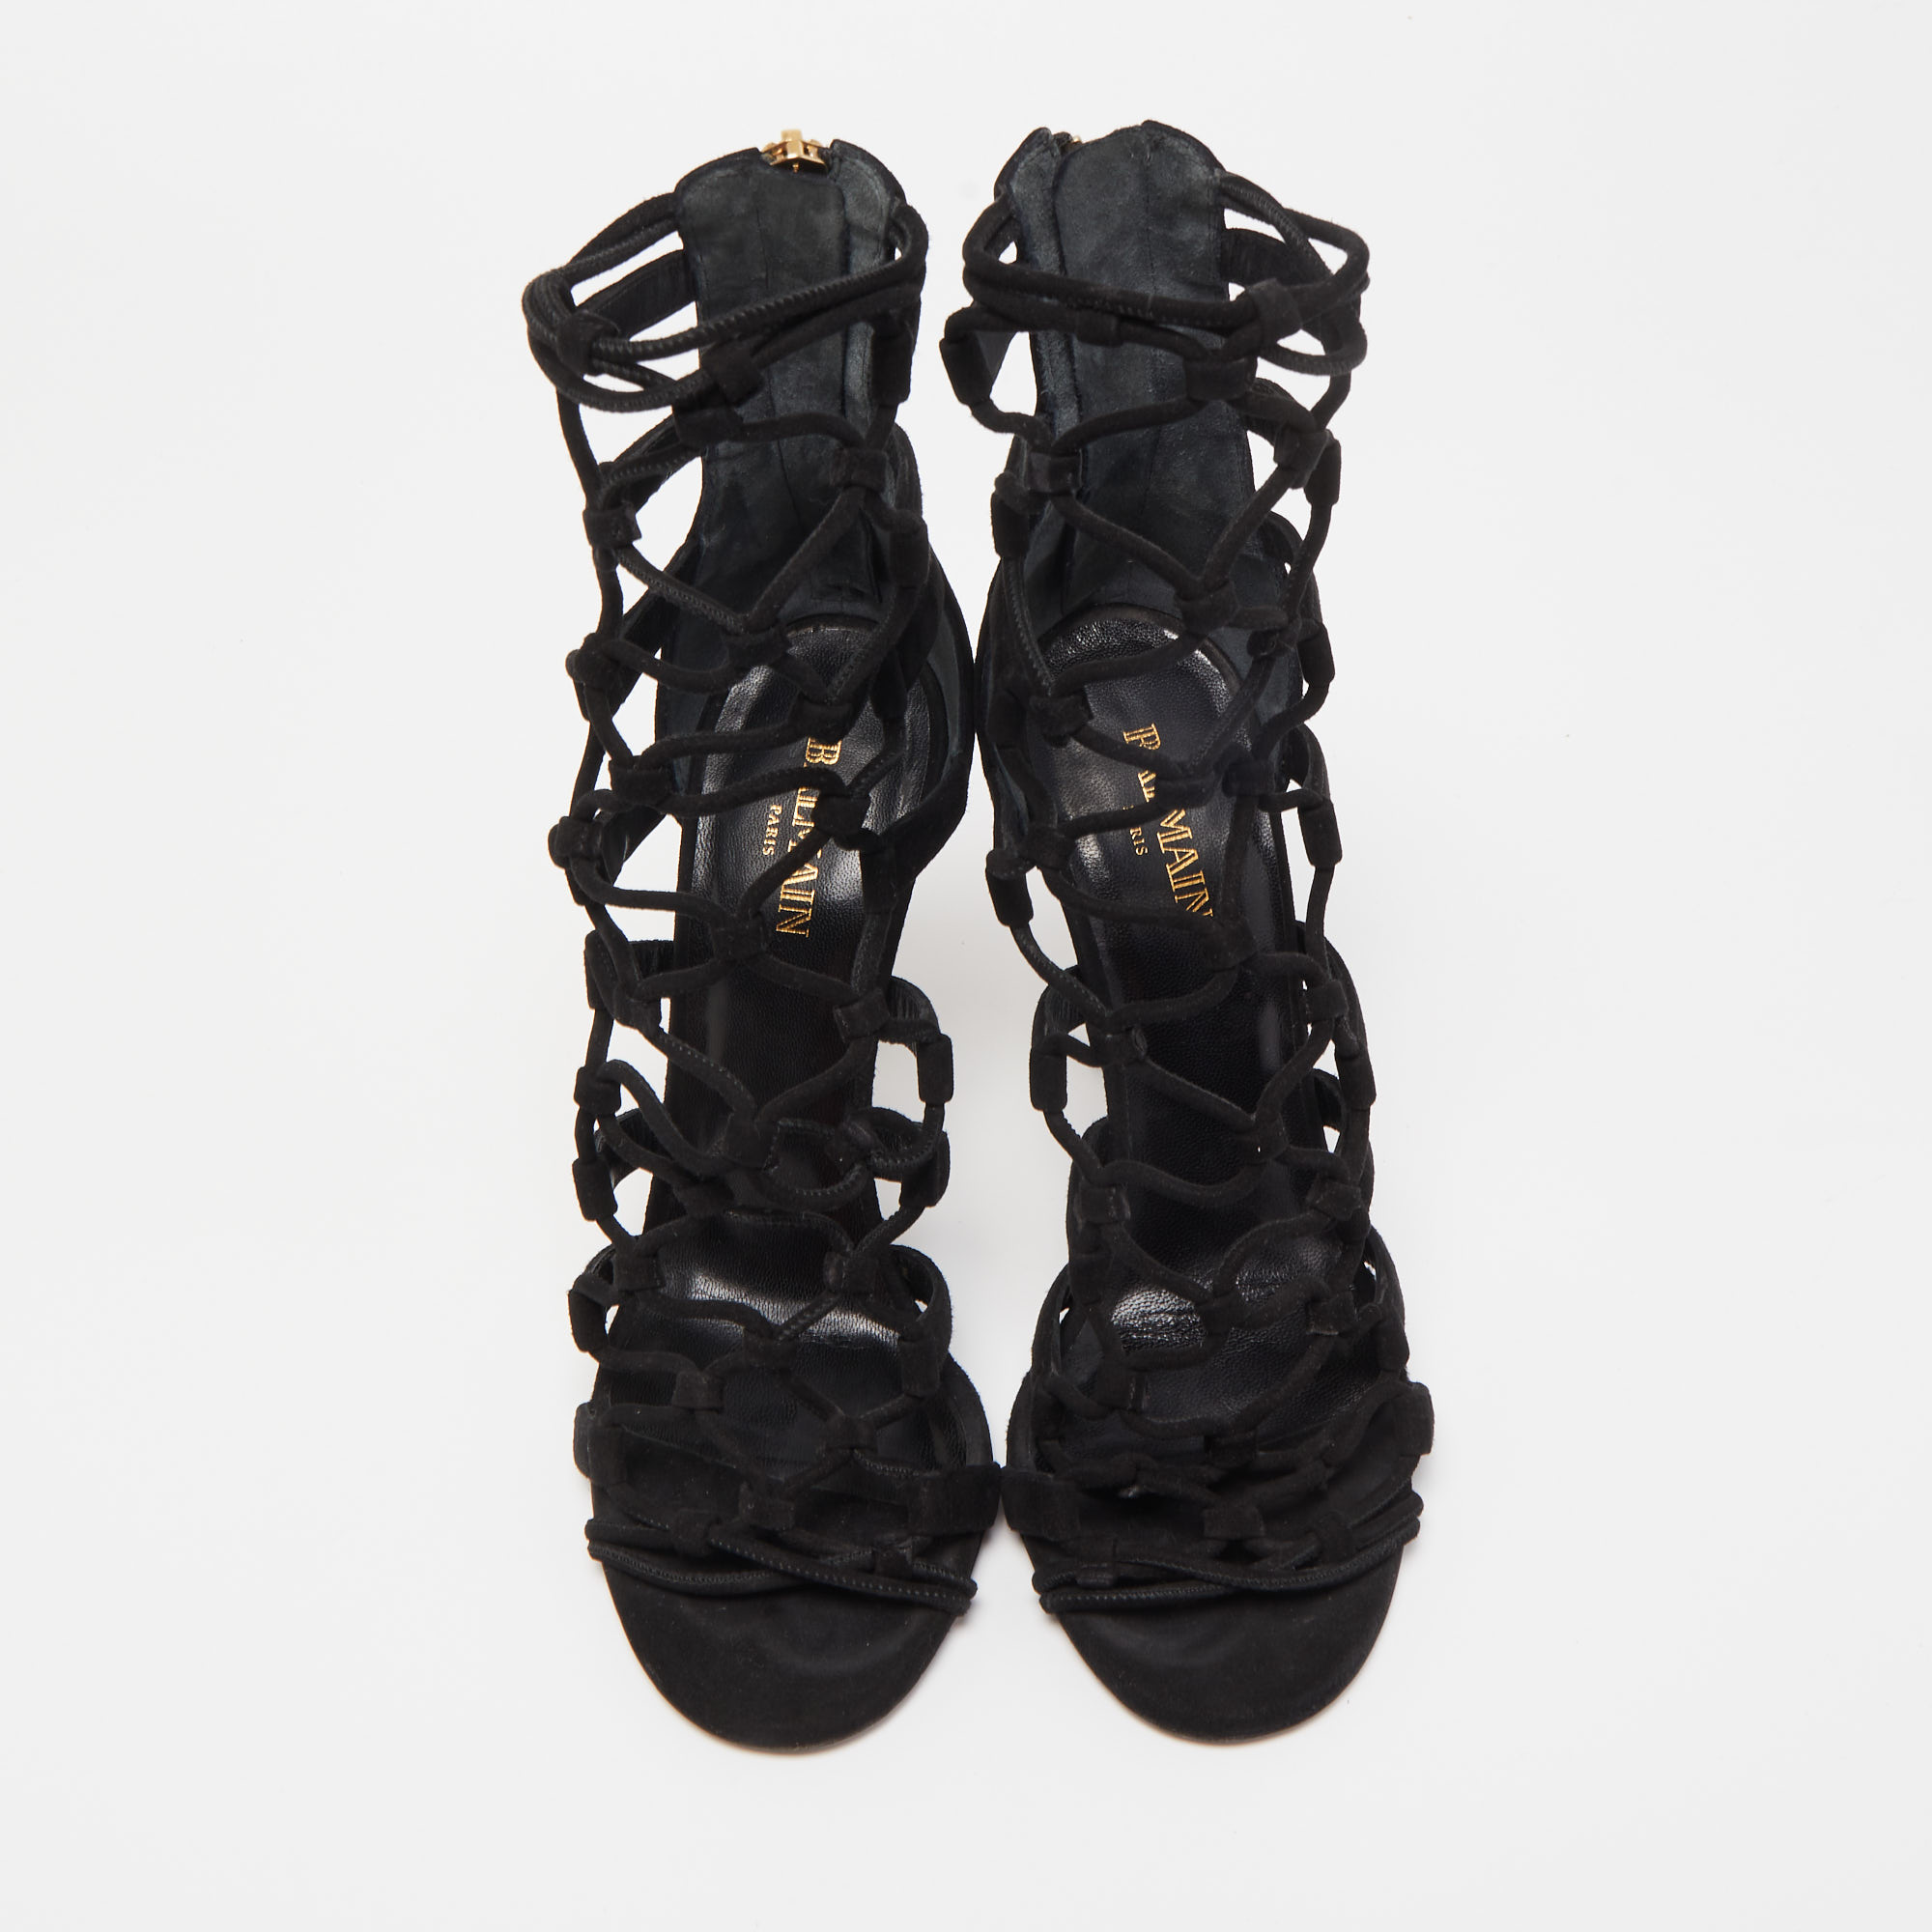 Balmain Black Suede Strappy Sandals Size 36